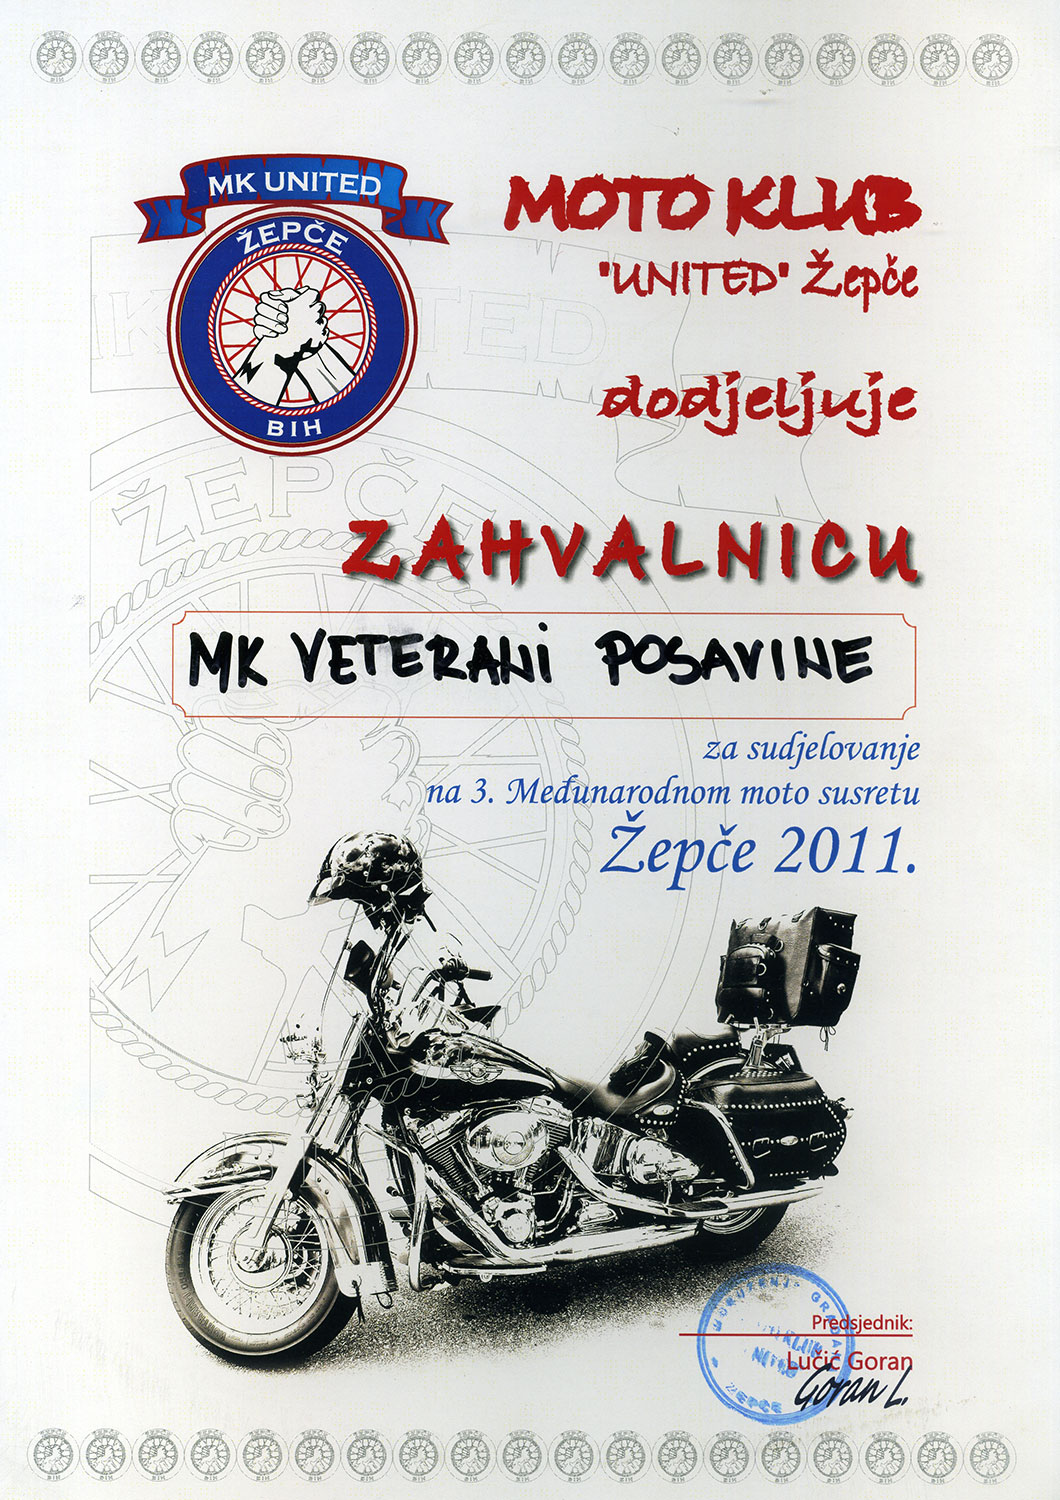 2011 07 08 mk united zepce